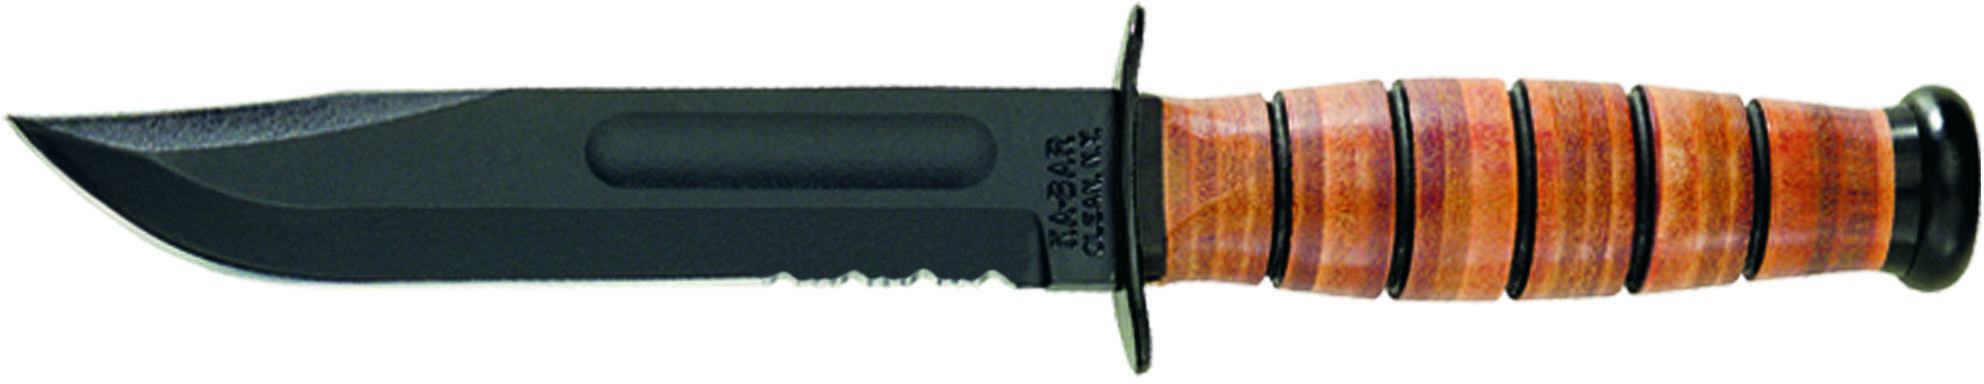 Ka-Bar US Military Fighting/Utility Knife U.S. Army 2-1219-2